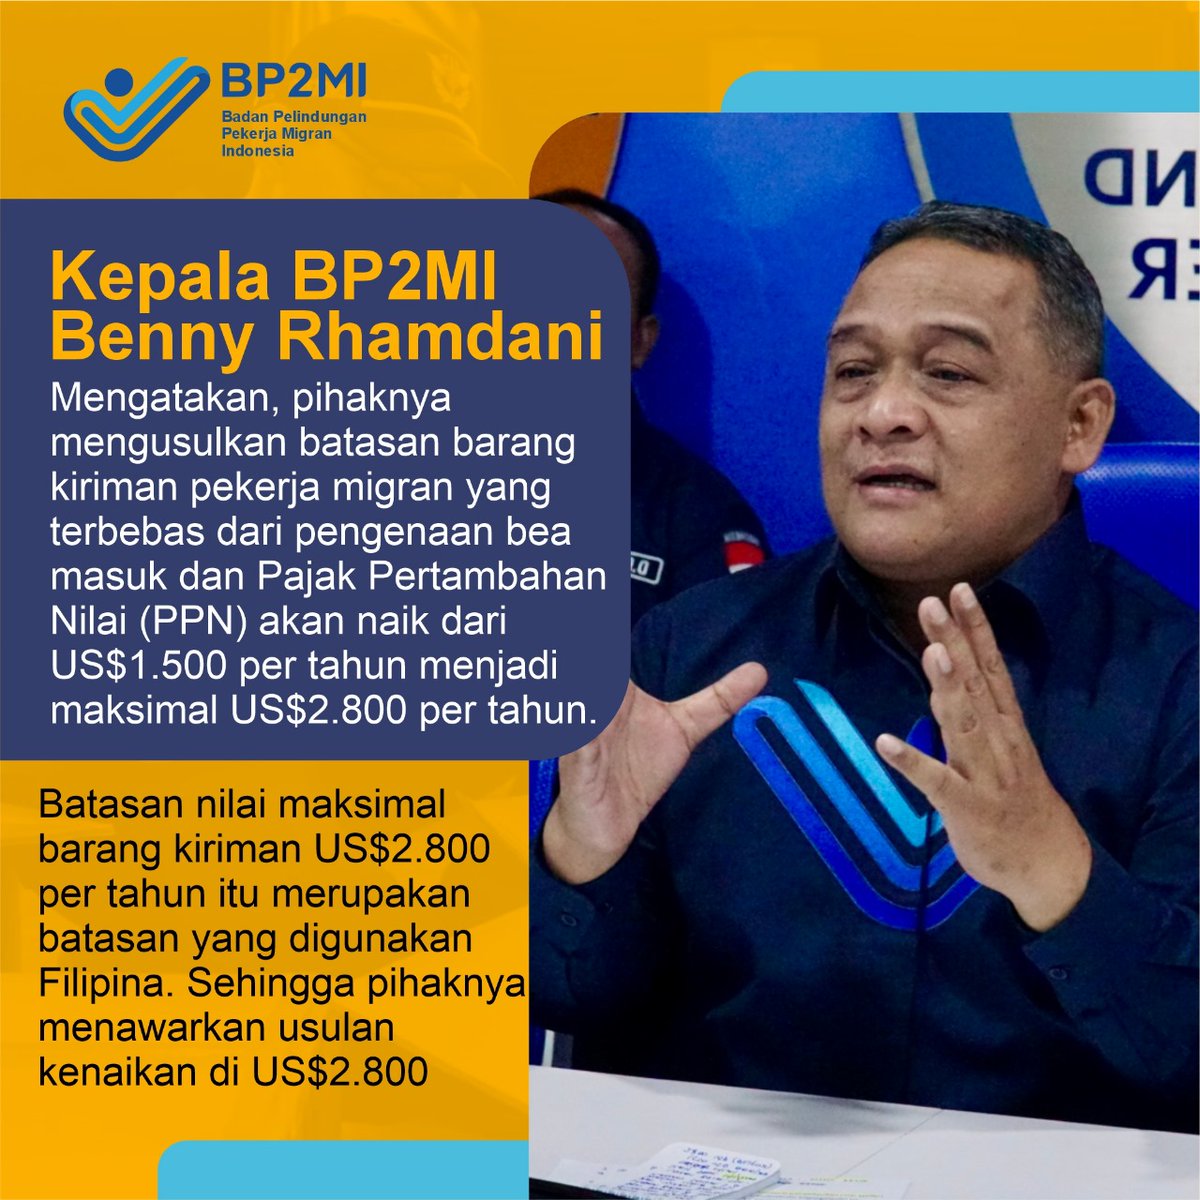 'Mudah mudahan usul BP2MI kepada Presiden Joko Widodo terkabulkan.' #PerjuanganBP2MIUntukPMI @kepala_BP2MI Benny Rhamdani